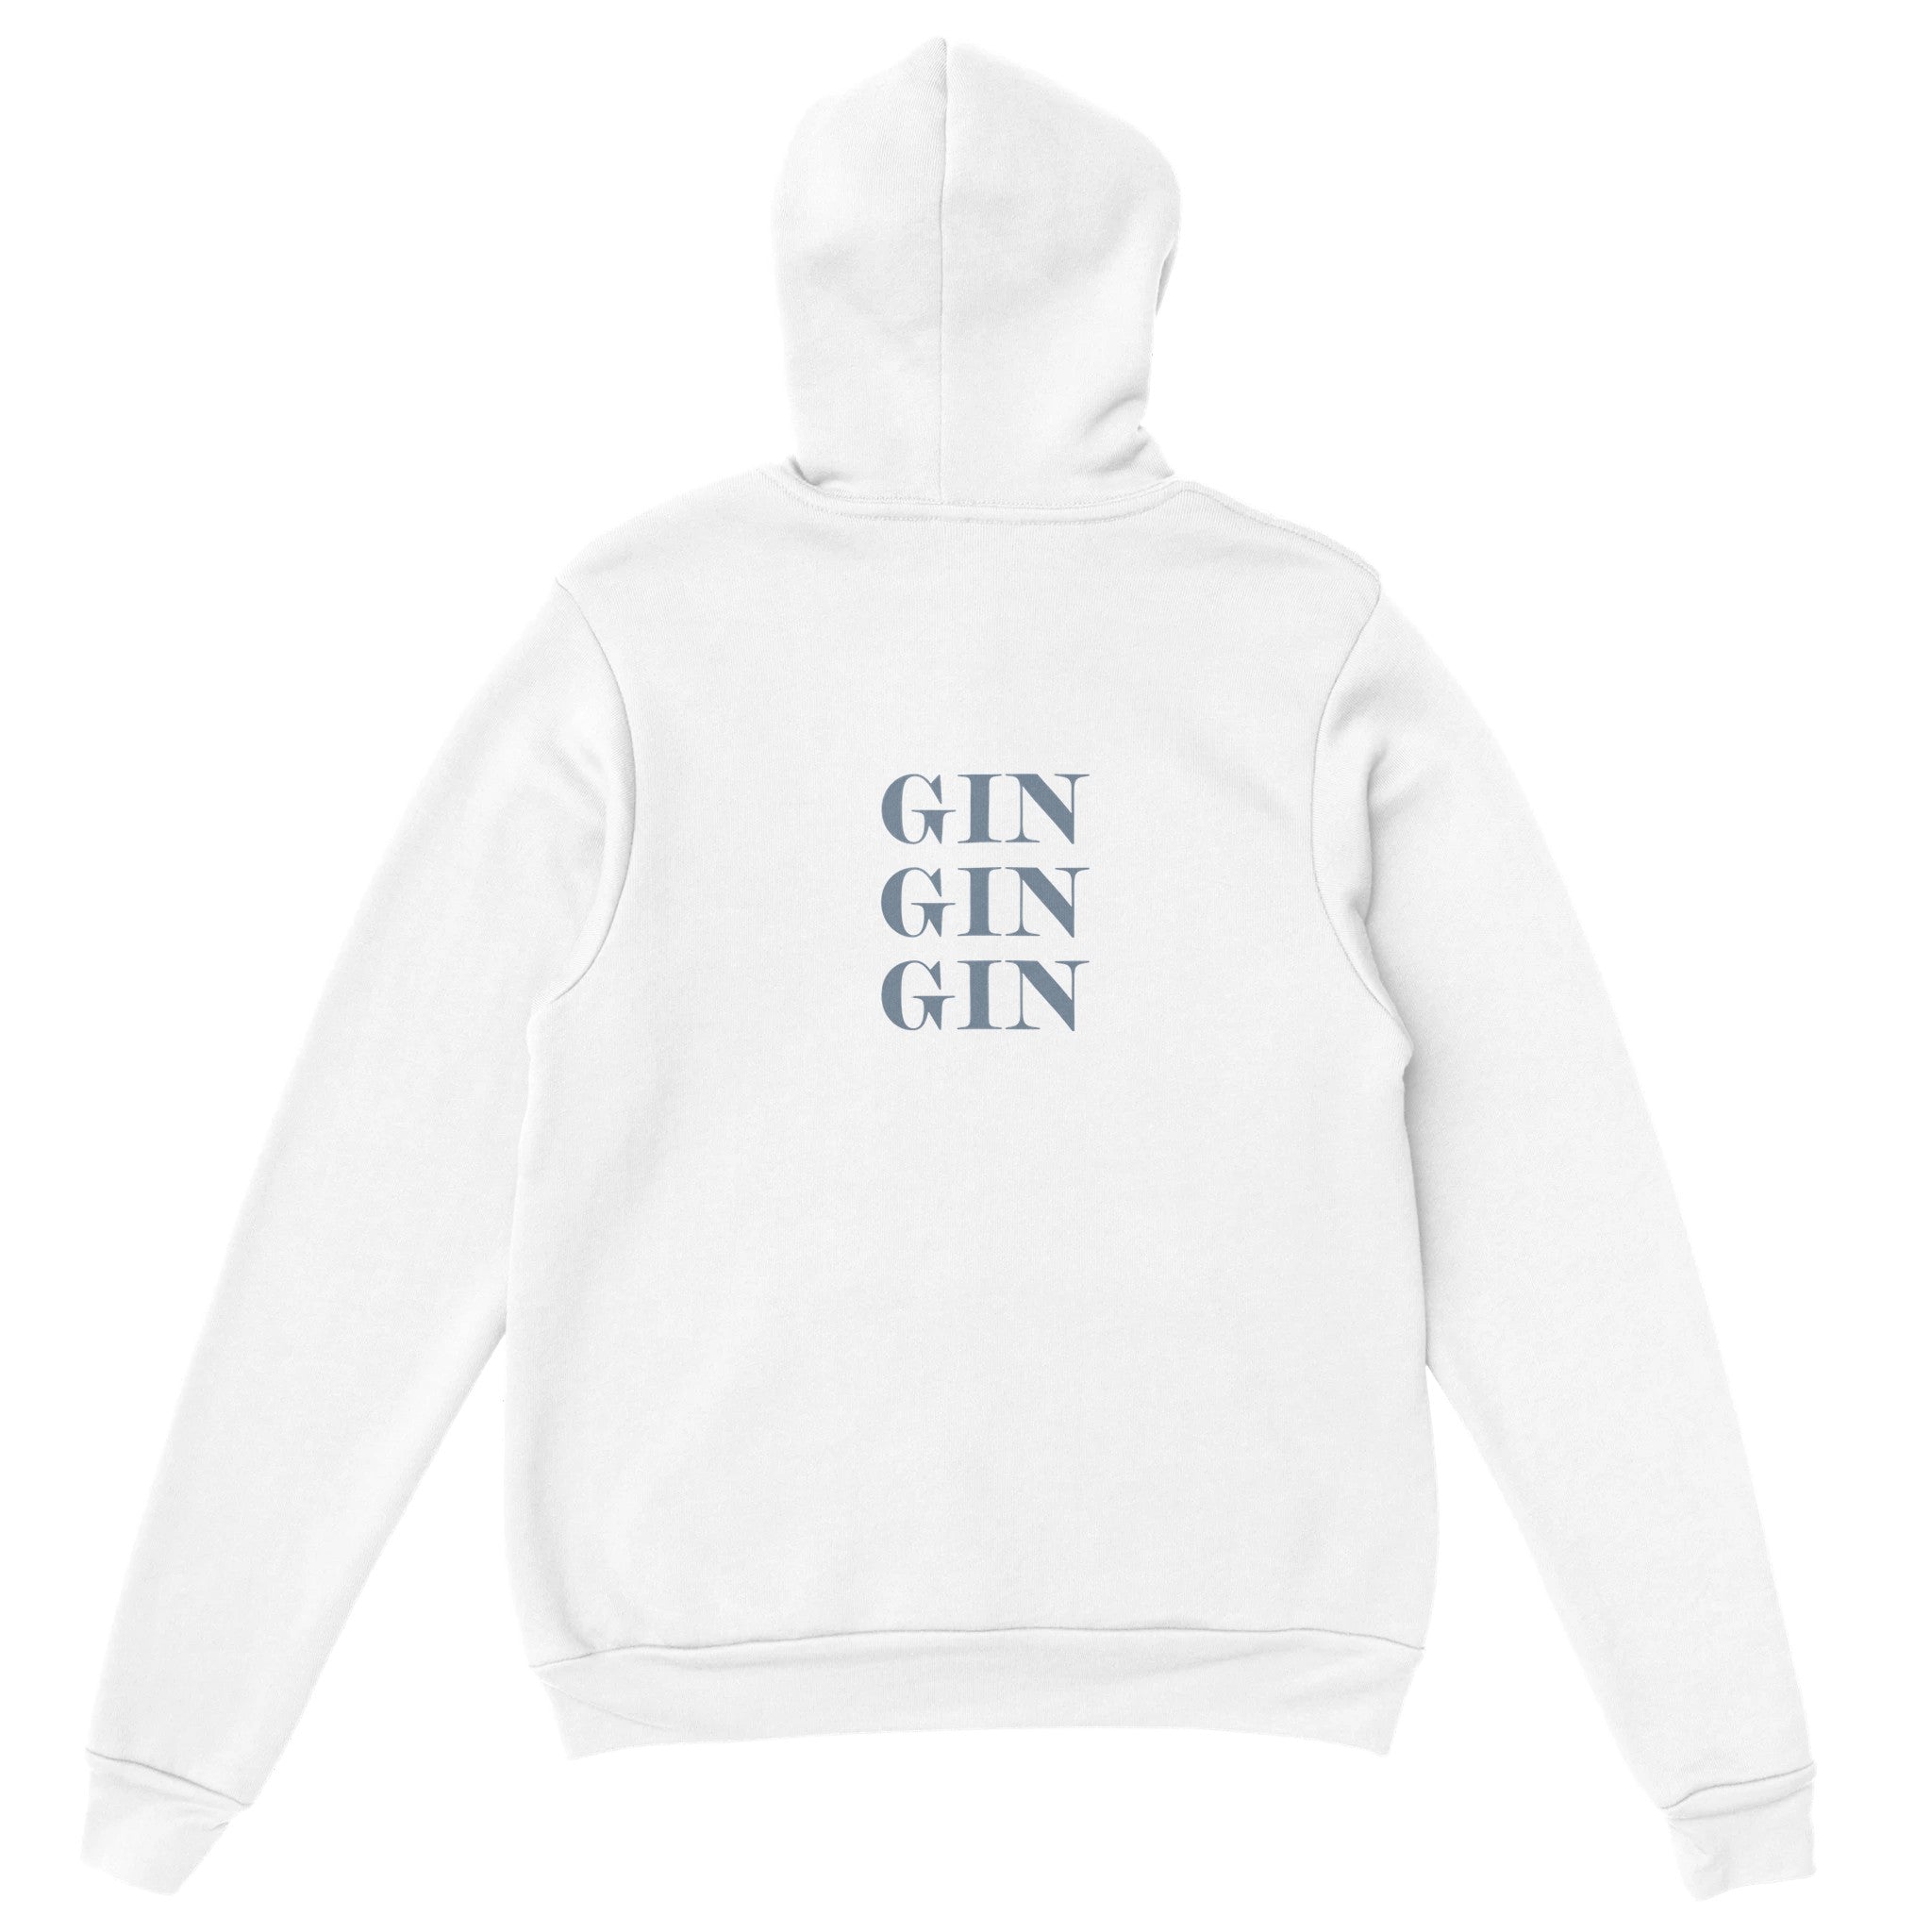 GIN GIN GIN Pullover Hoodie - Optimalprint